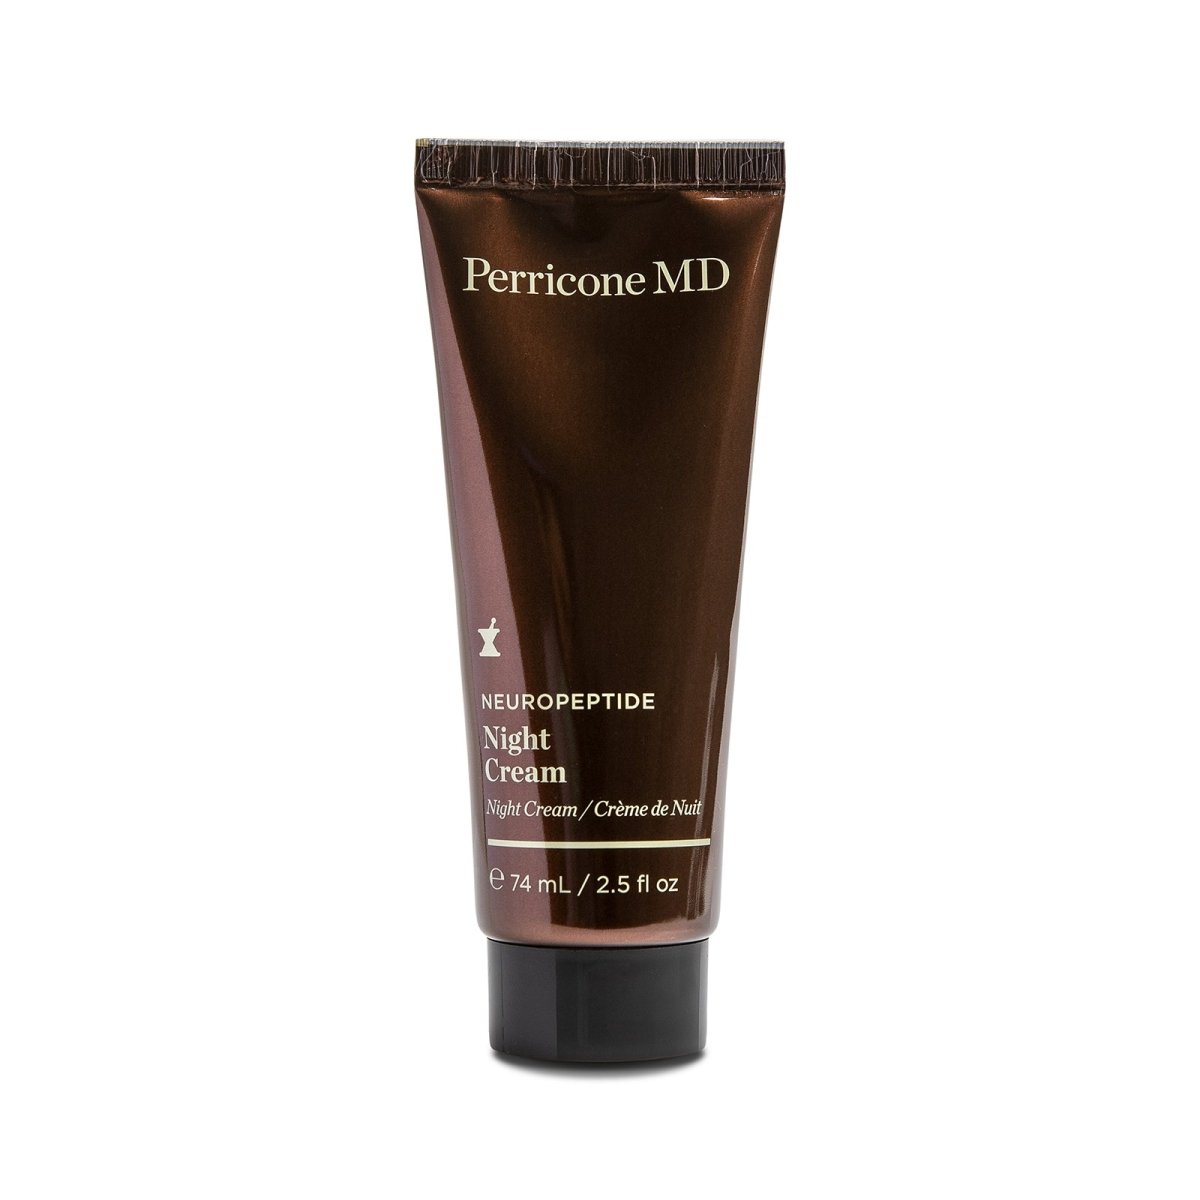 Perricone MD Neuropeptide Night Cream - SkincareEssentials